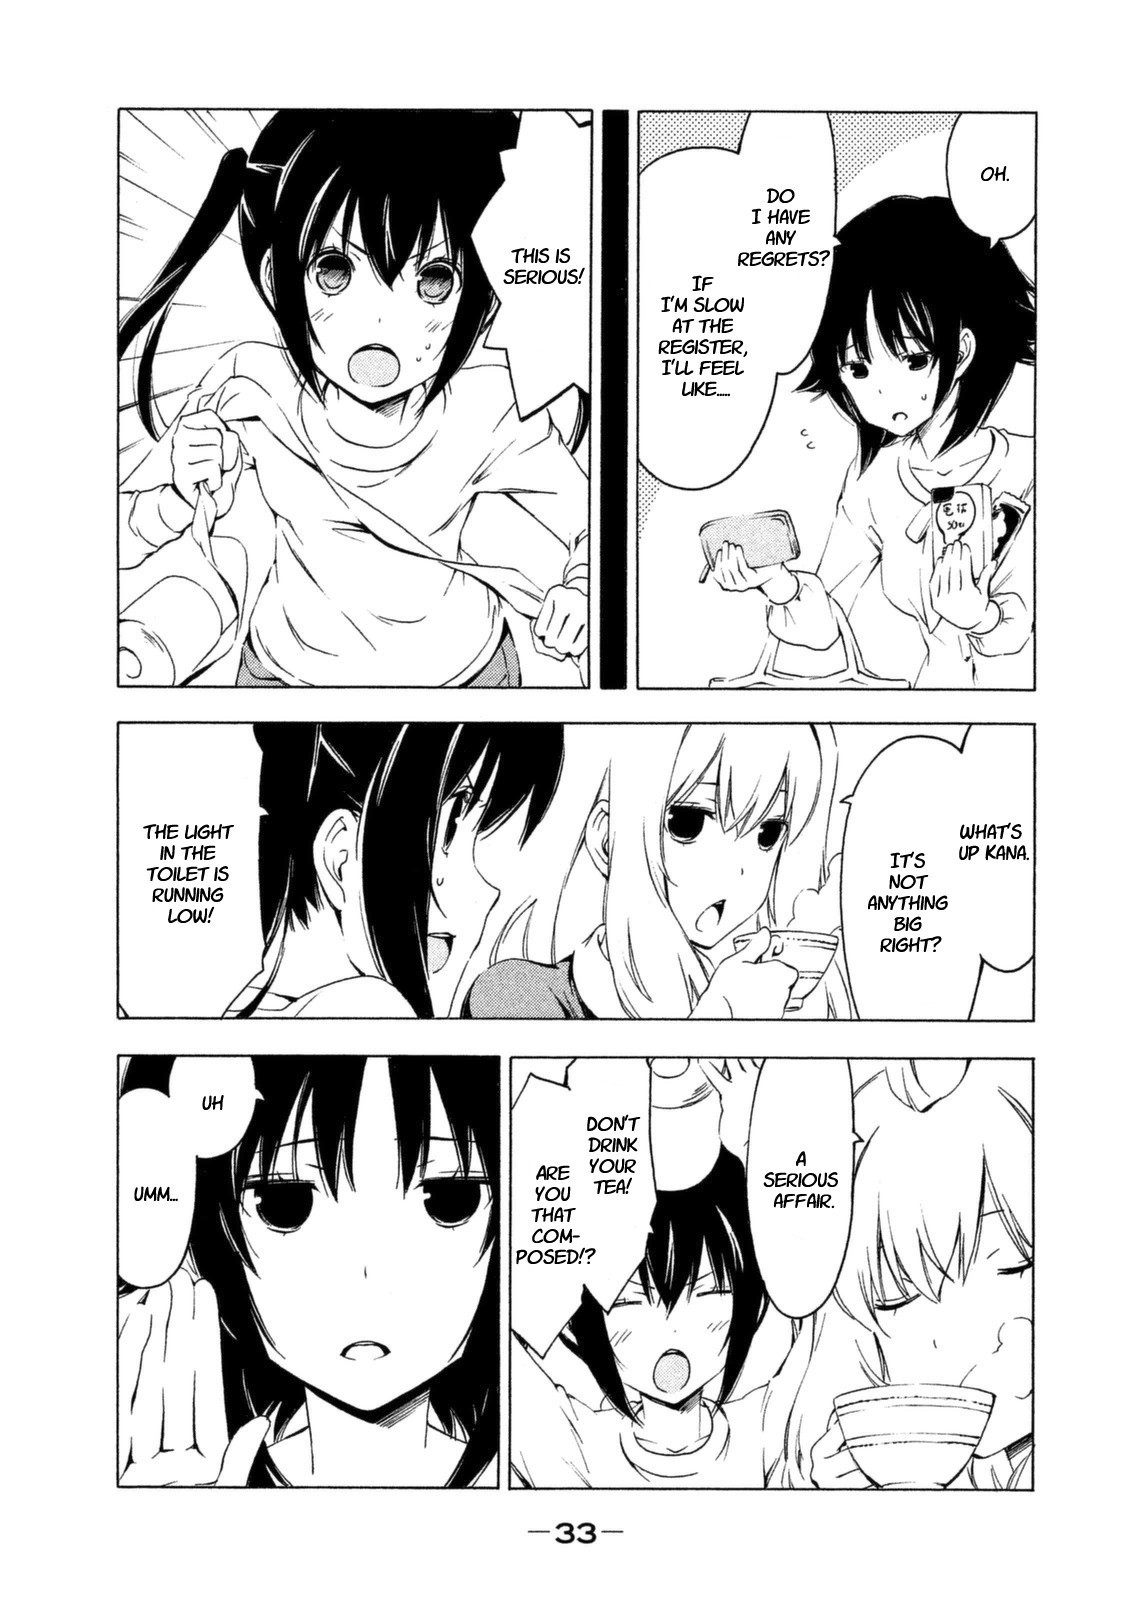 Minami-ke chapter 220 page 3